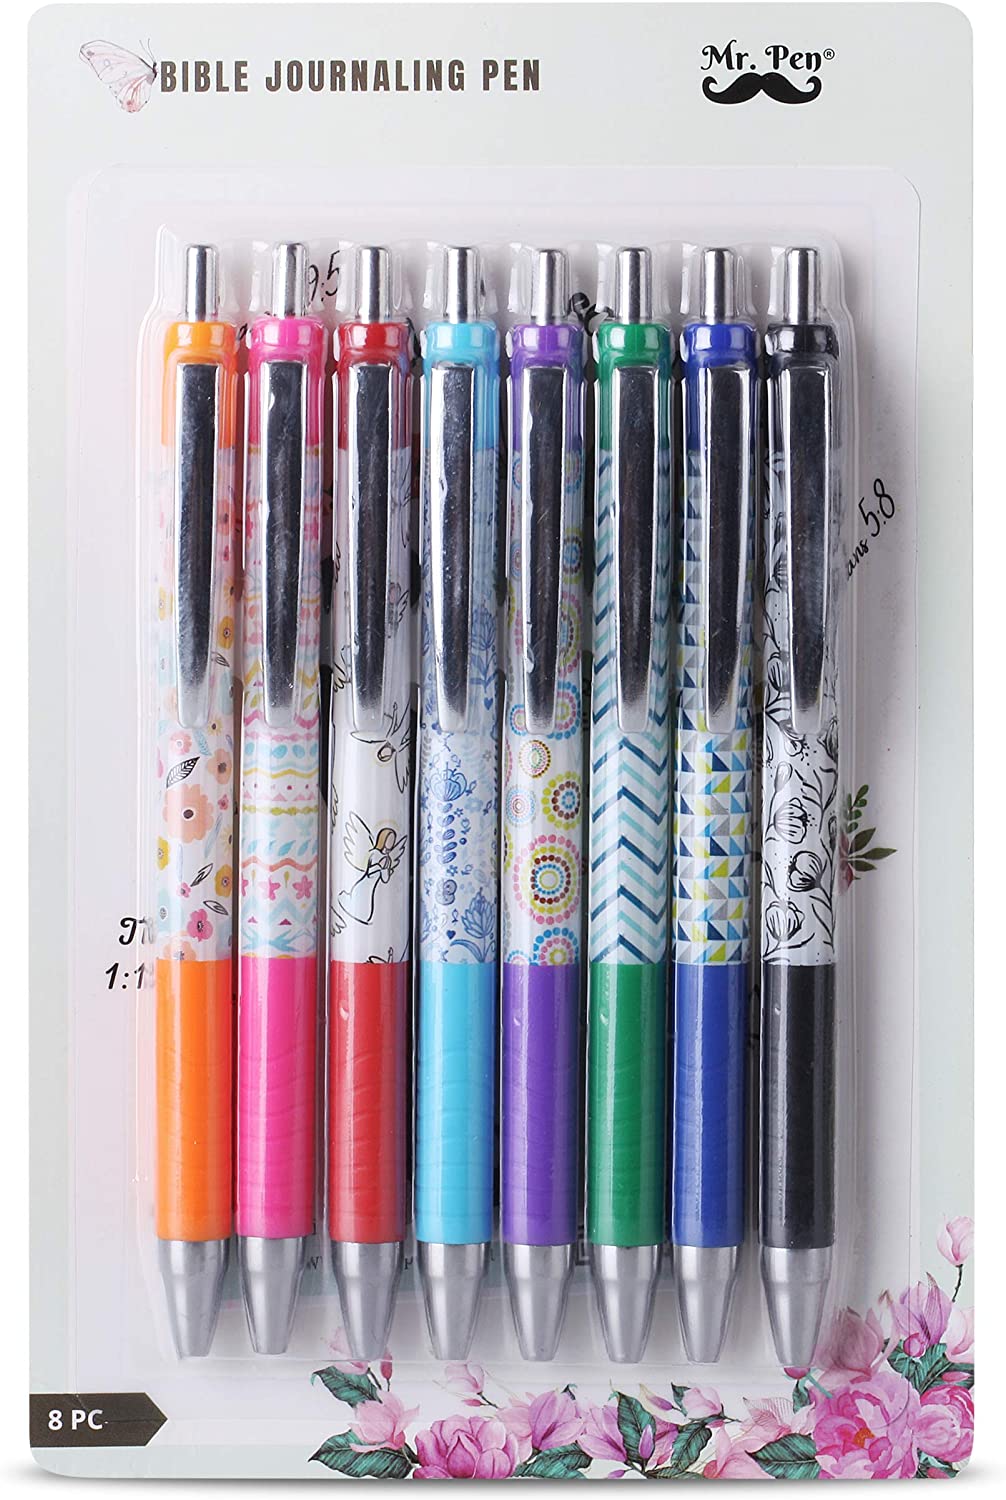 Mr. Pen- Bible Journaling Pens, 8 Pack - Mr. Pen Store